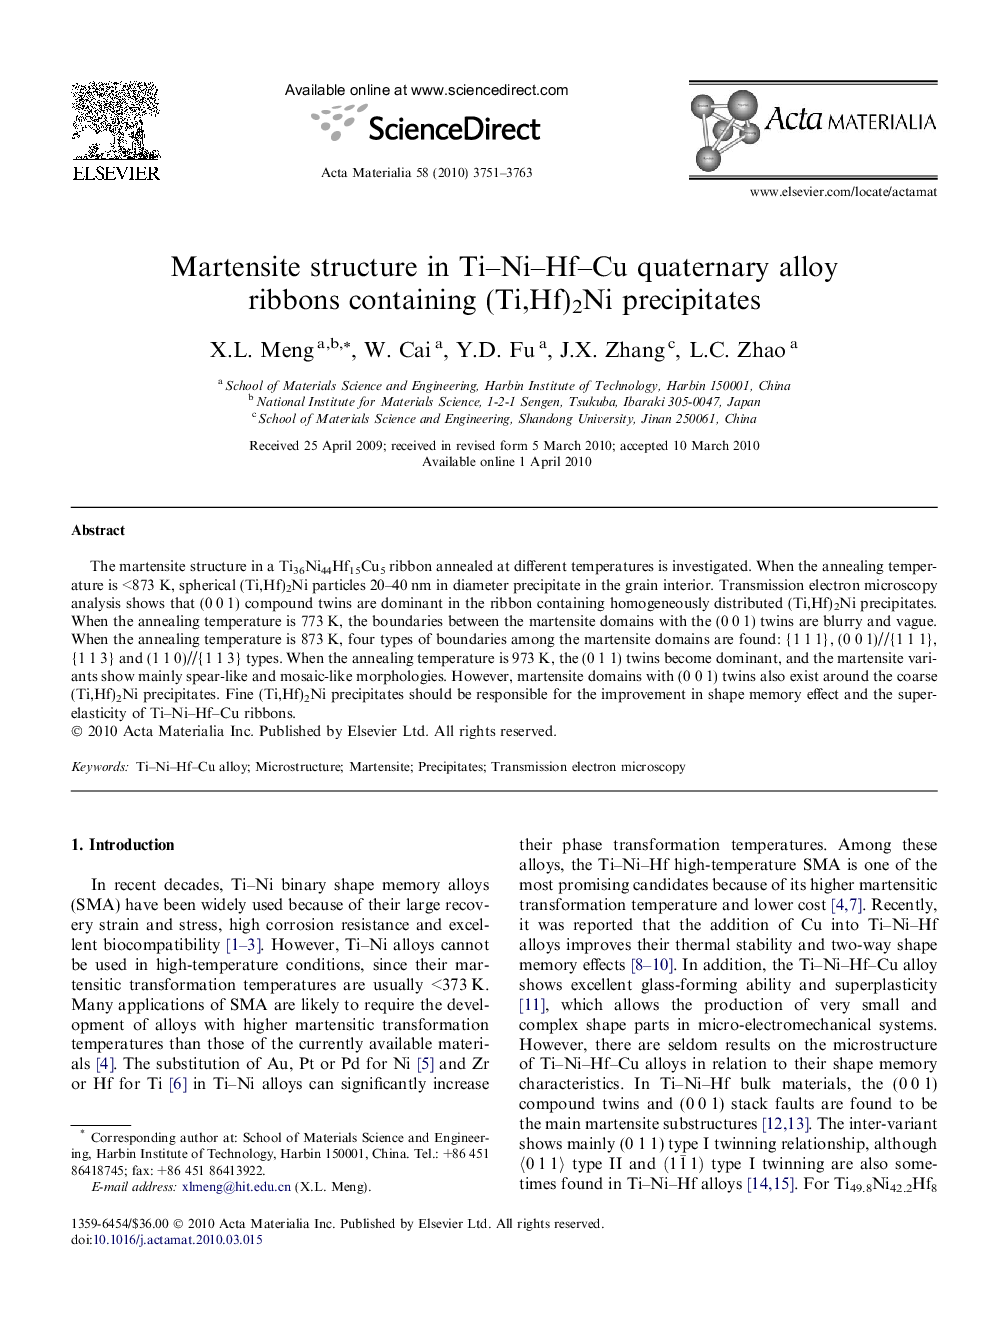 Martensite structure in Ti–Ni–Hf–Cu quaternary alloy ribbons containing (Ti,Hf)2Ni precipitates